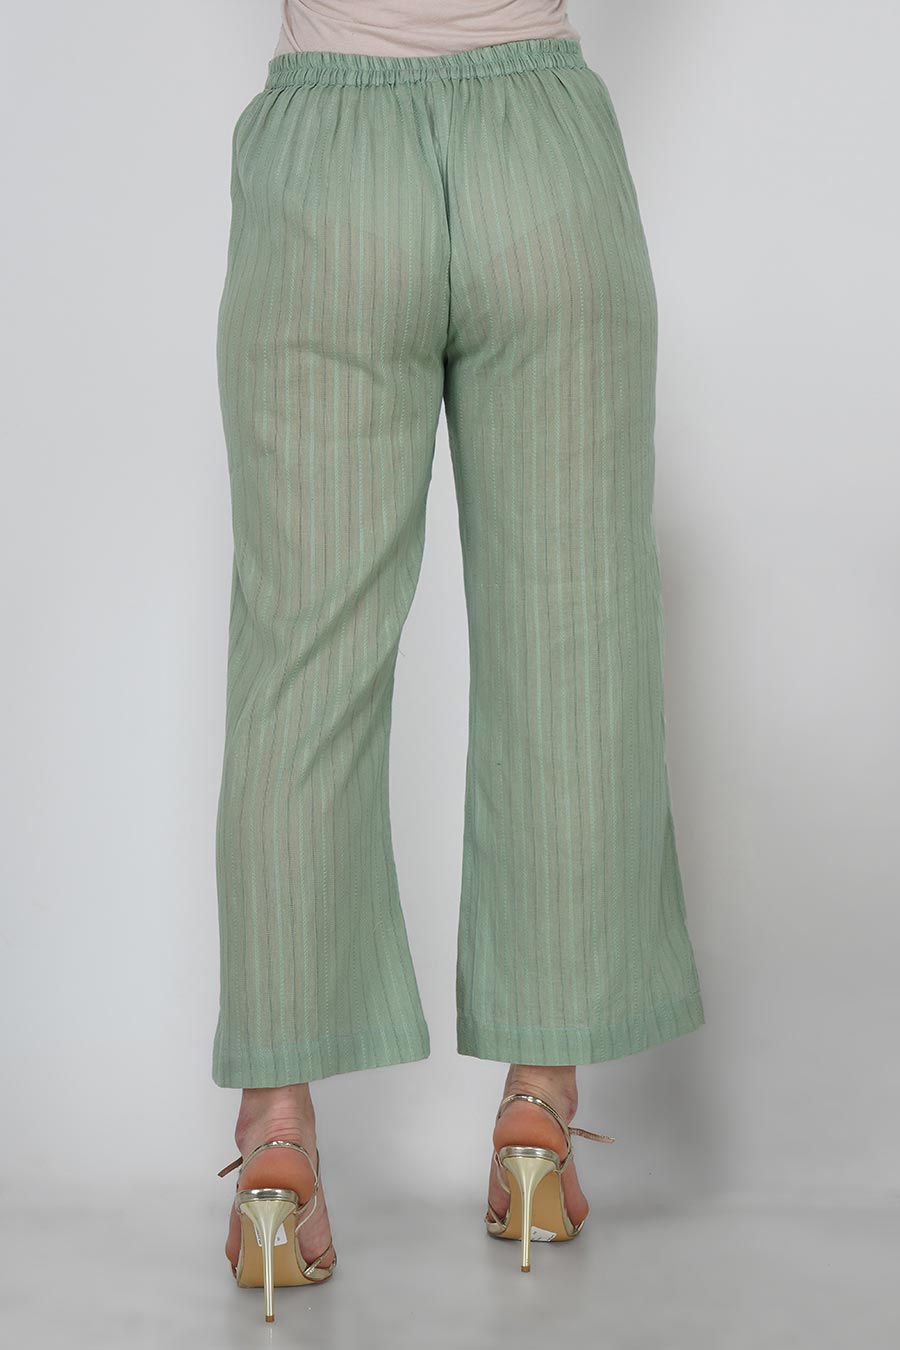 Rosemary Leno Cotton Striped Pants